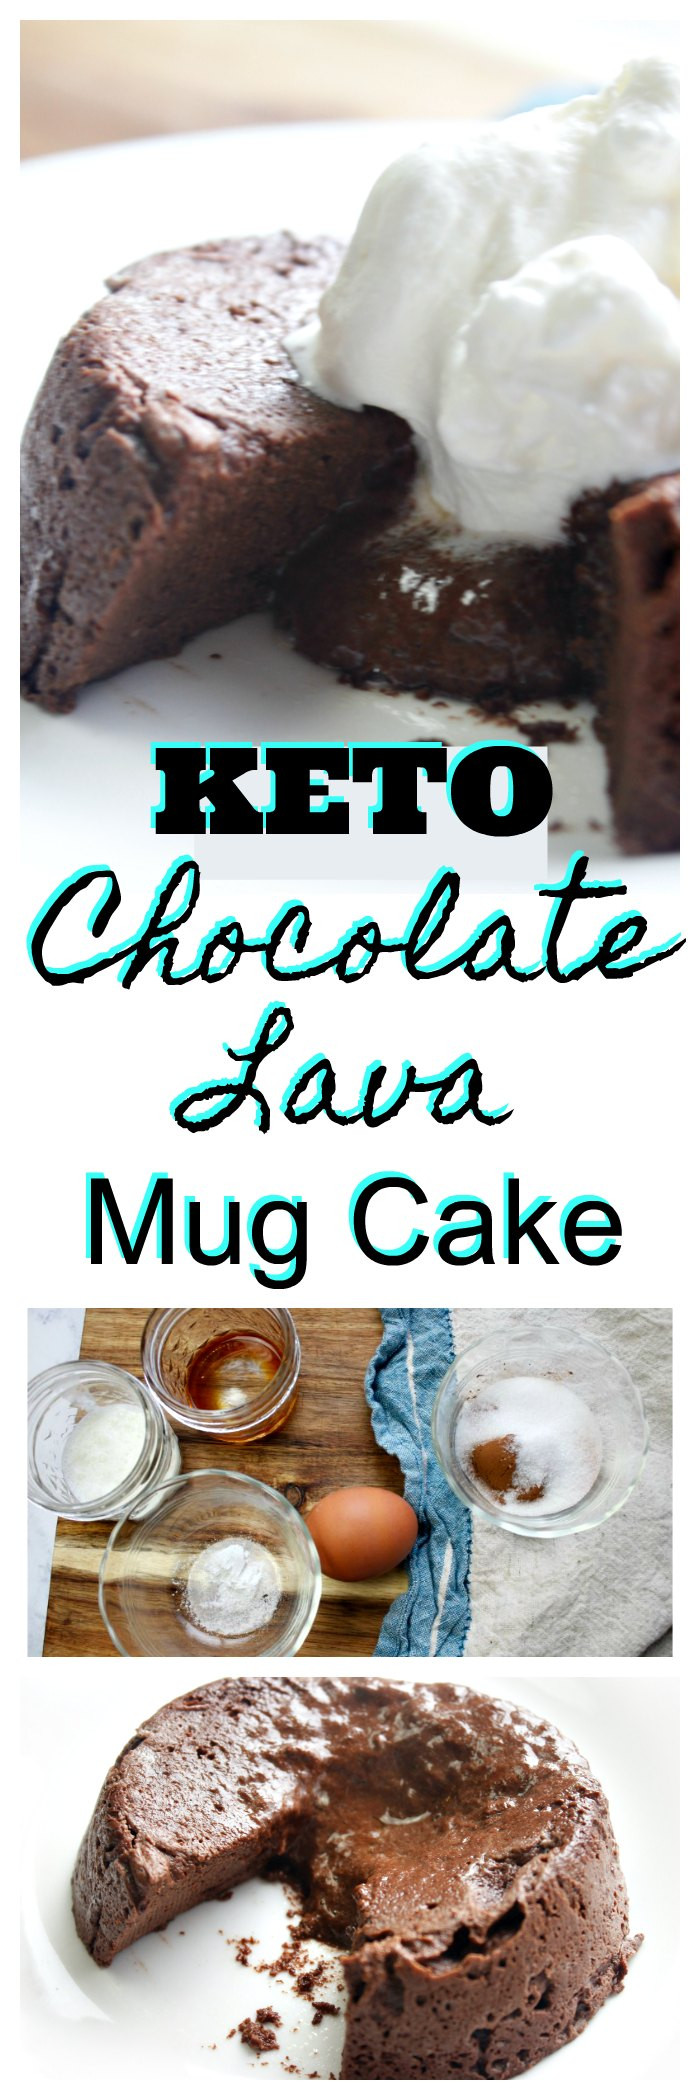 Chocolate Keto Mug Cake
 Keto Chocolate Lava Mug Cake Recipe iSaveA2Z